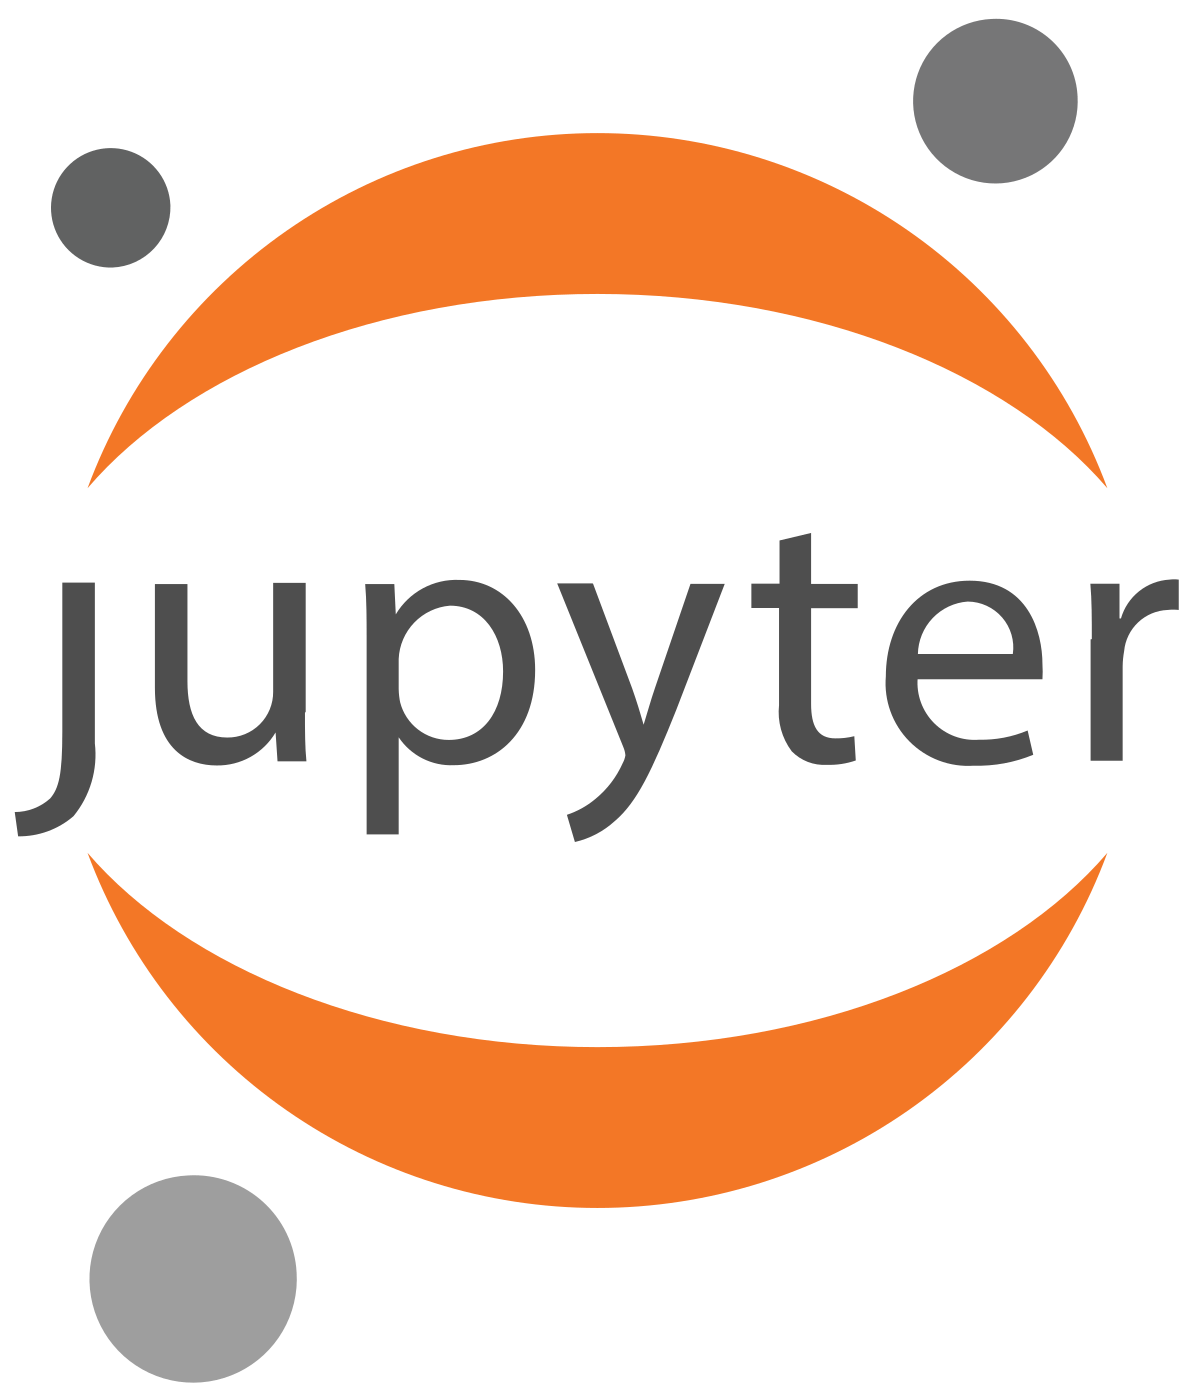 Project Jupyter Logo